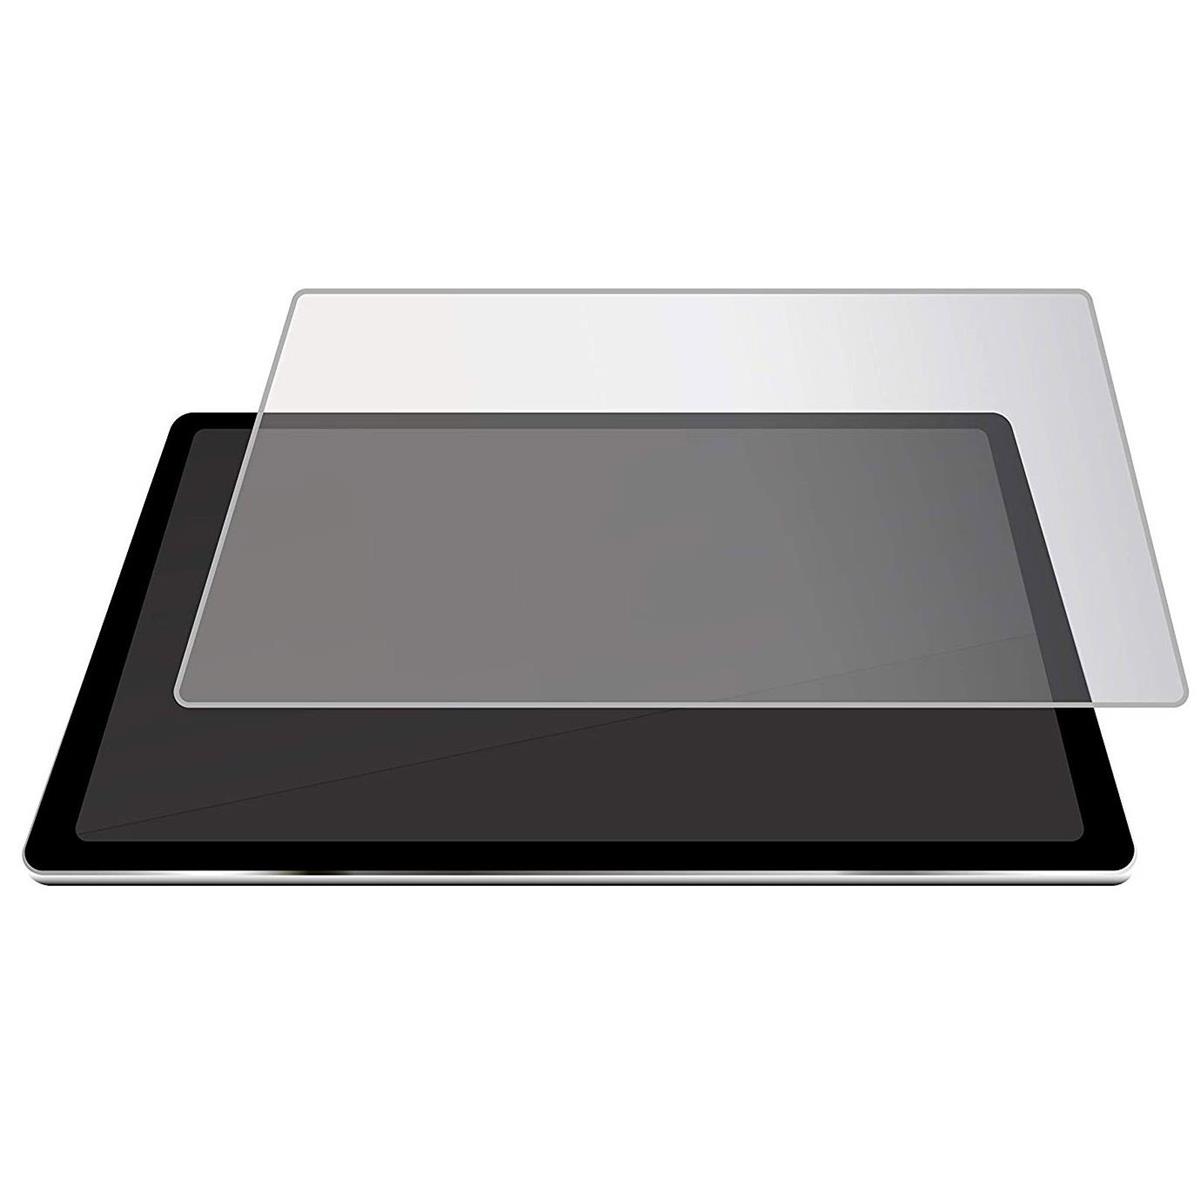 Image of STM Glass Screen Protector for iPad Mini 5th Gen/iPad Mini 4